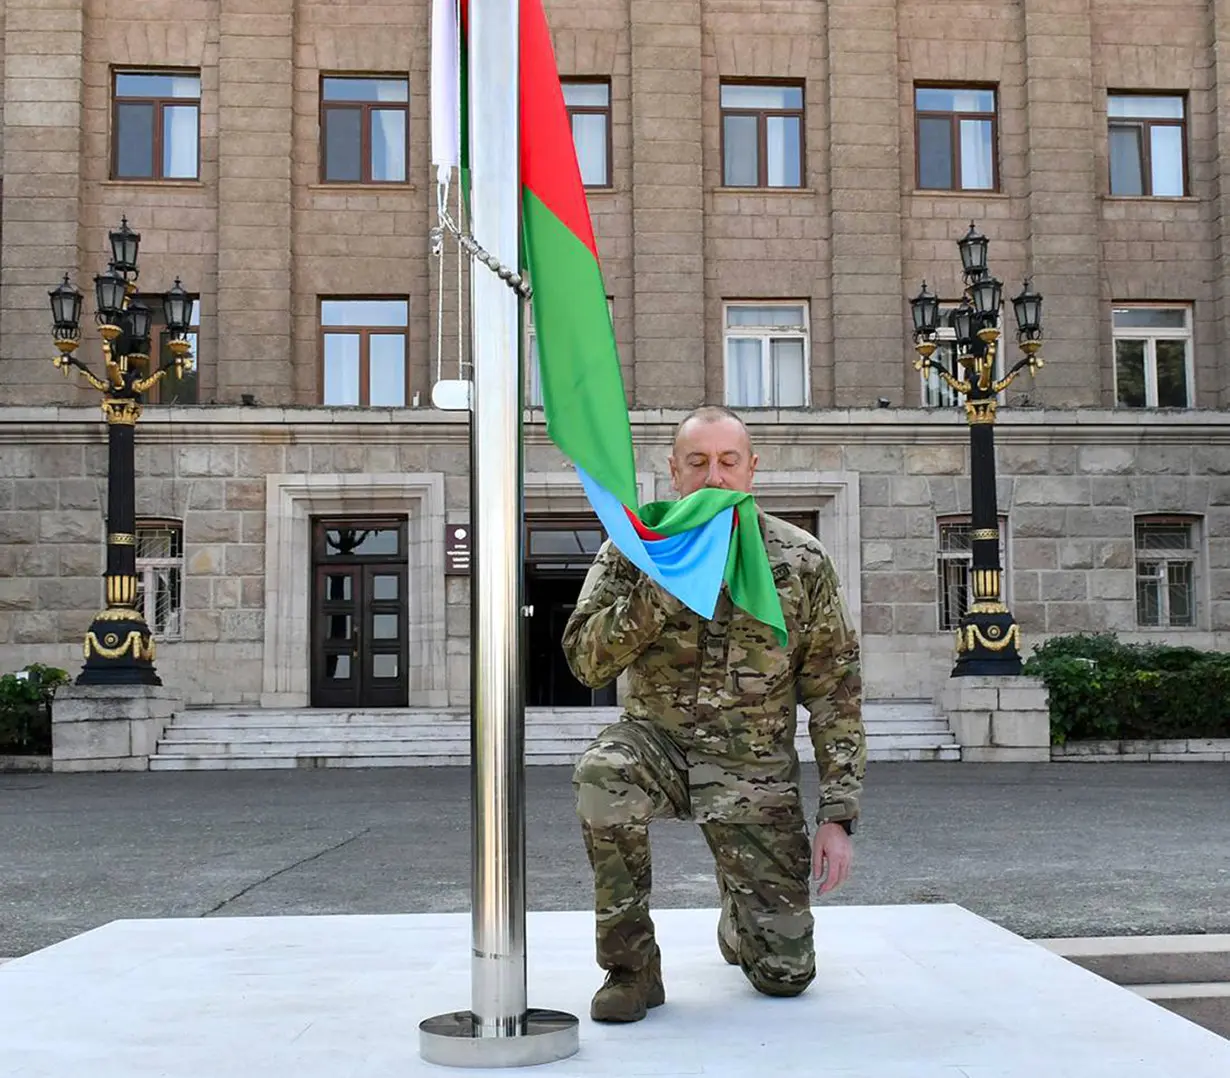 Azerbaijan's president raises the nation's flag in a former breakaway region's capital